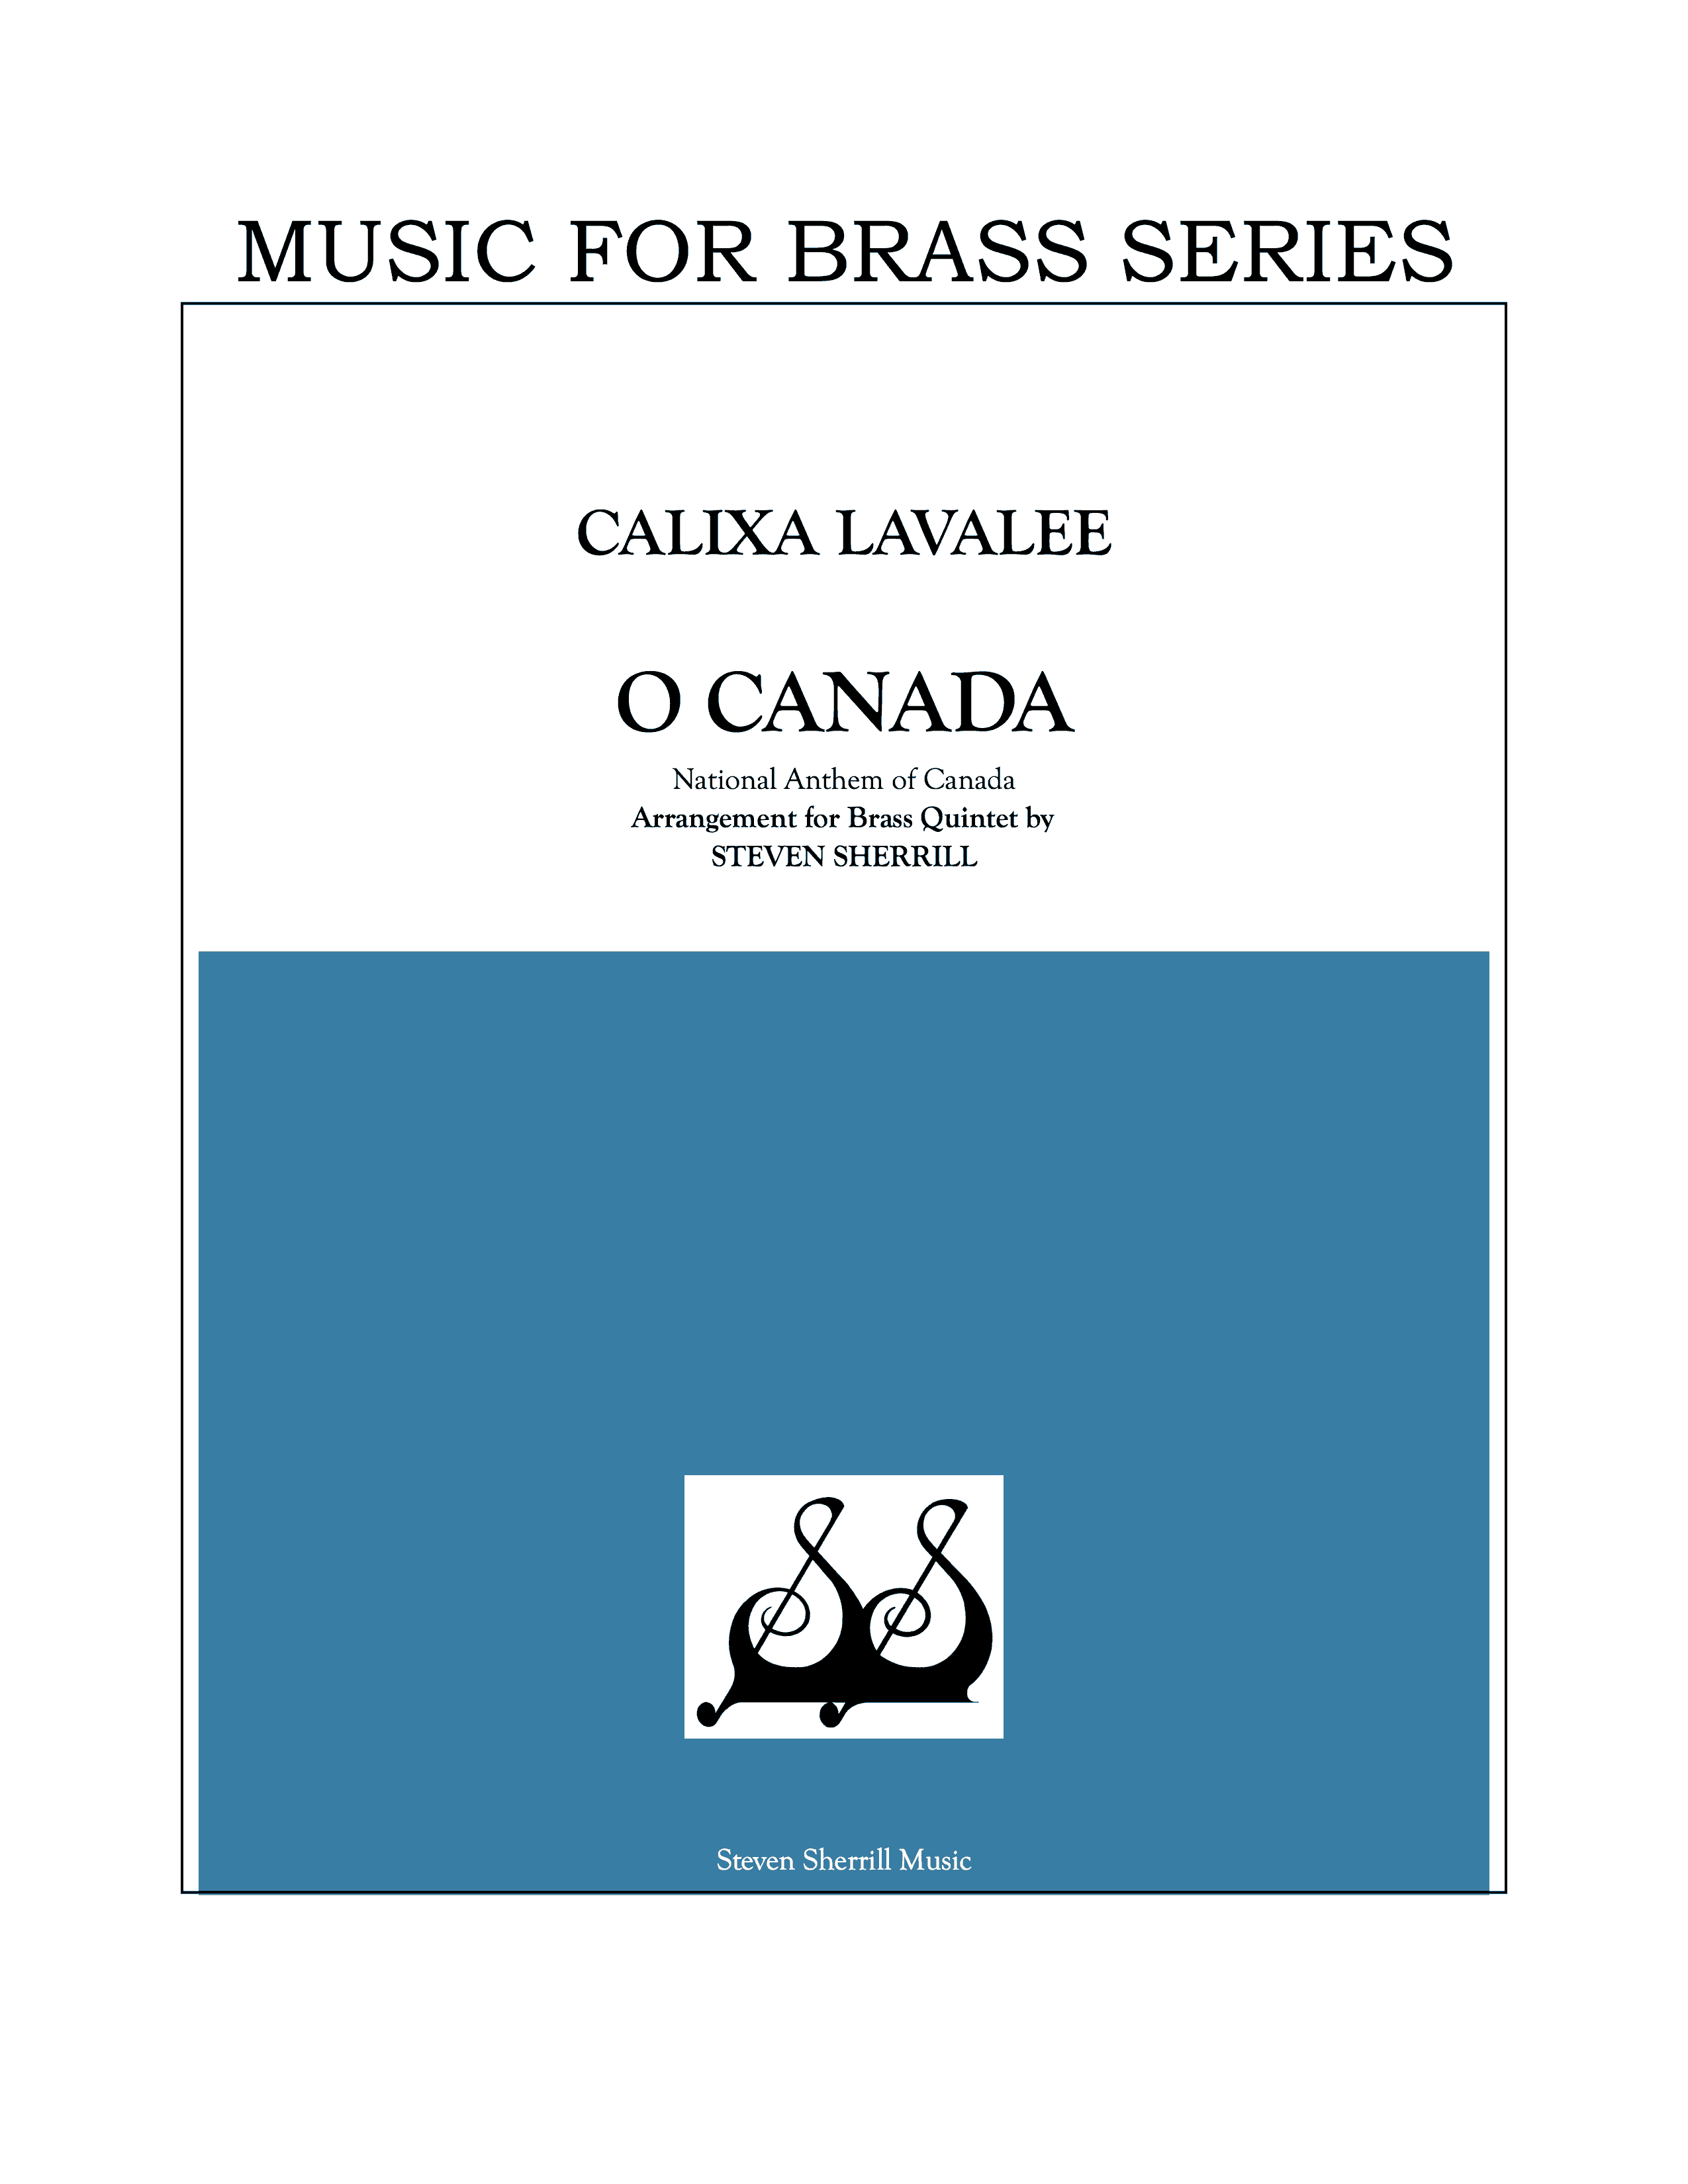 O Canada cover page